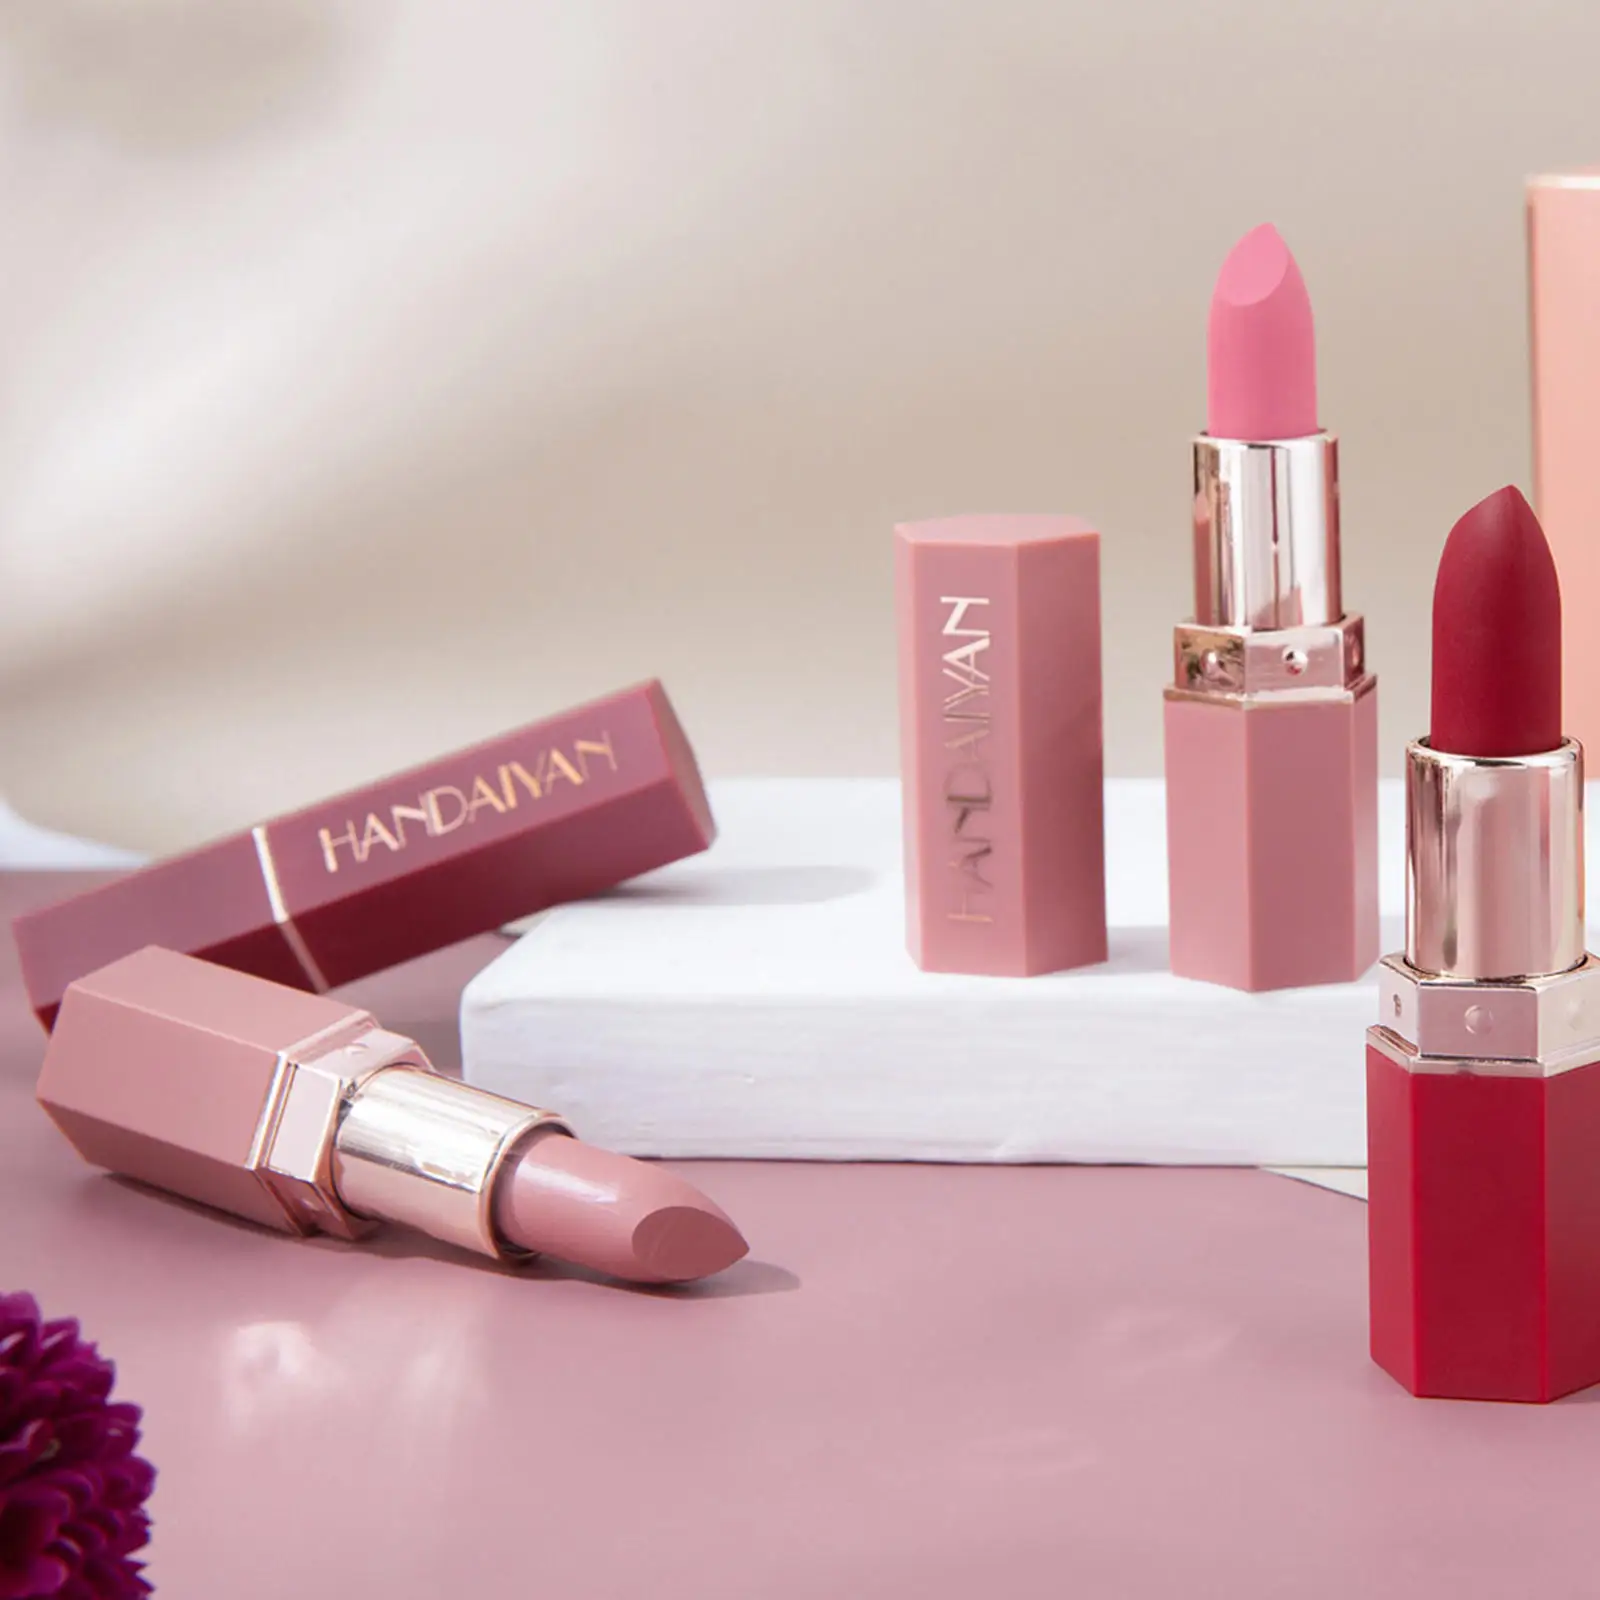 Velvet Matte Lipsticks Pigmented Lip Makeup Waterproof Gifts Women Girls